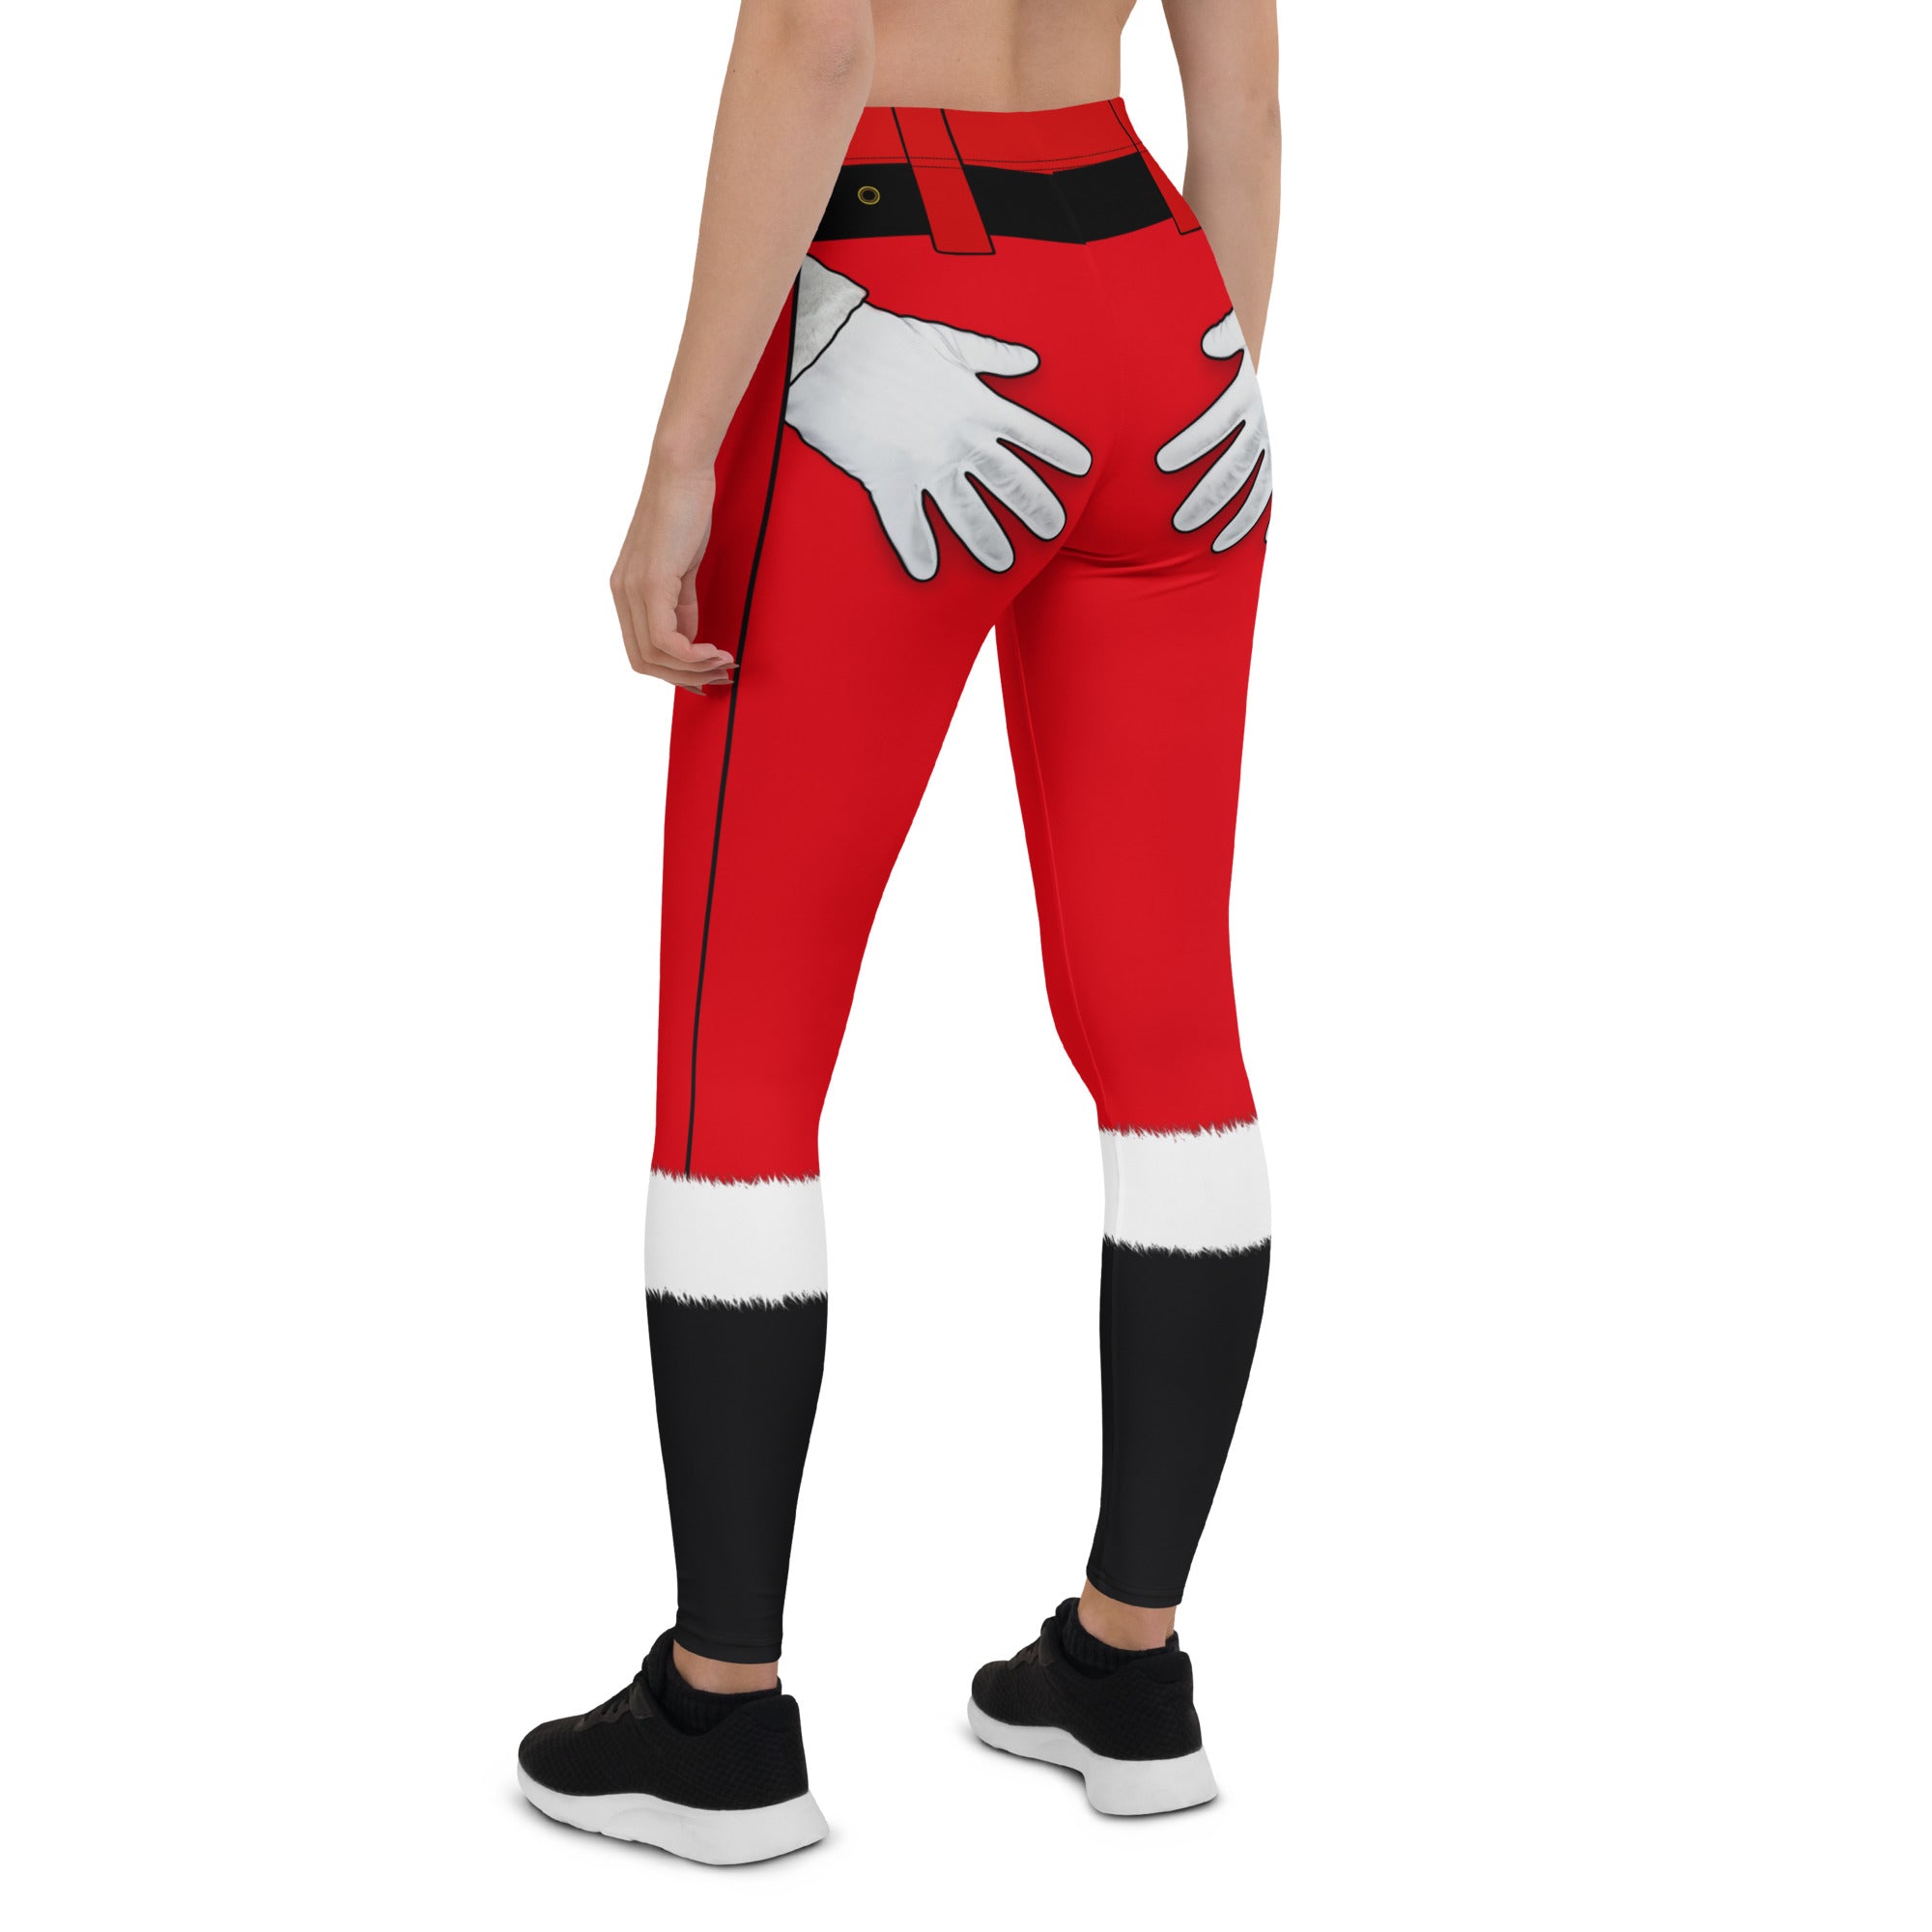 Neon Christmas Leggings: Women's Christmas Outfits